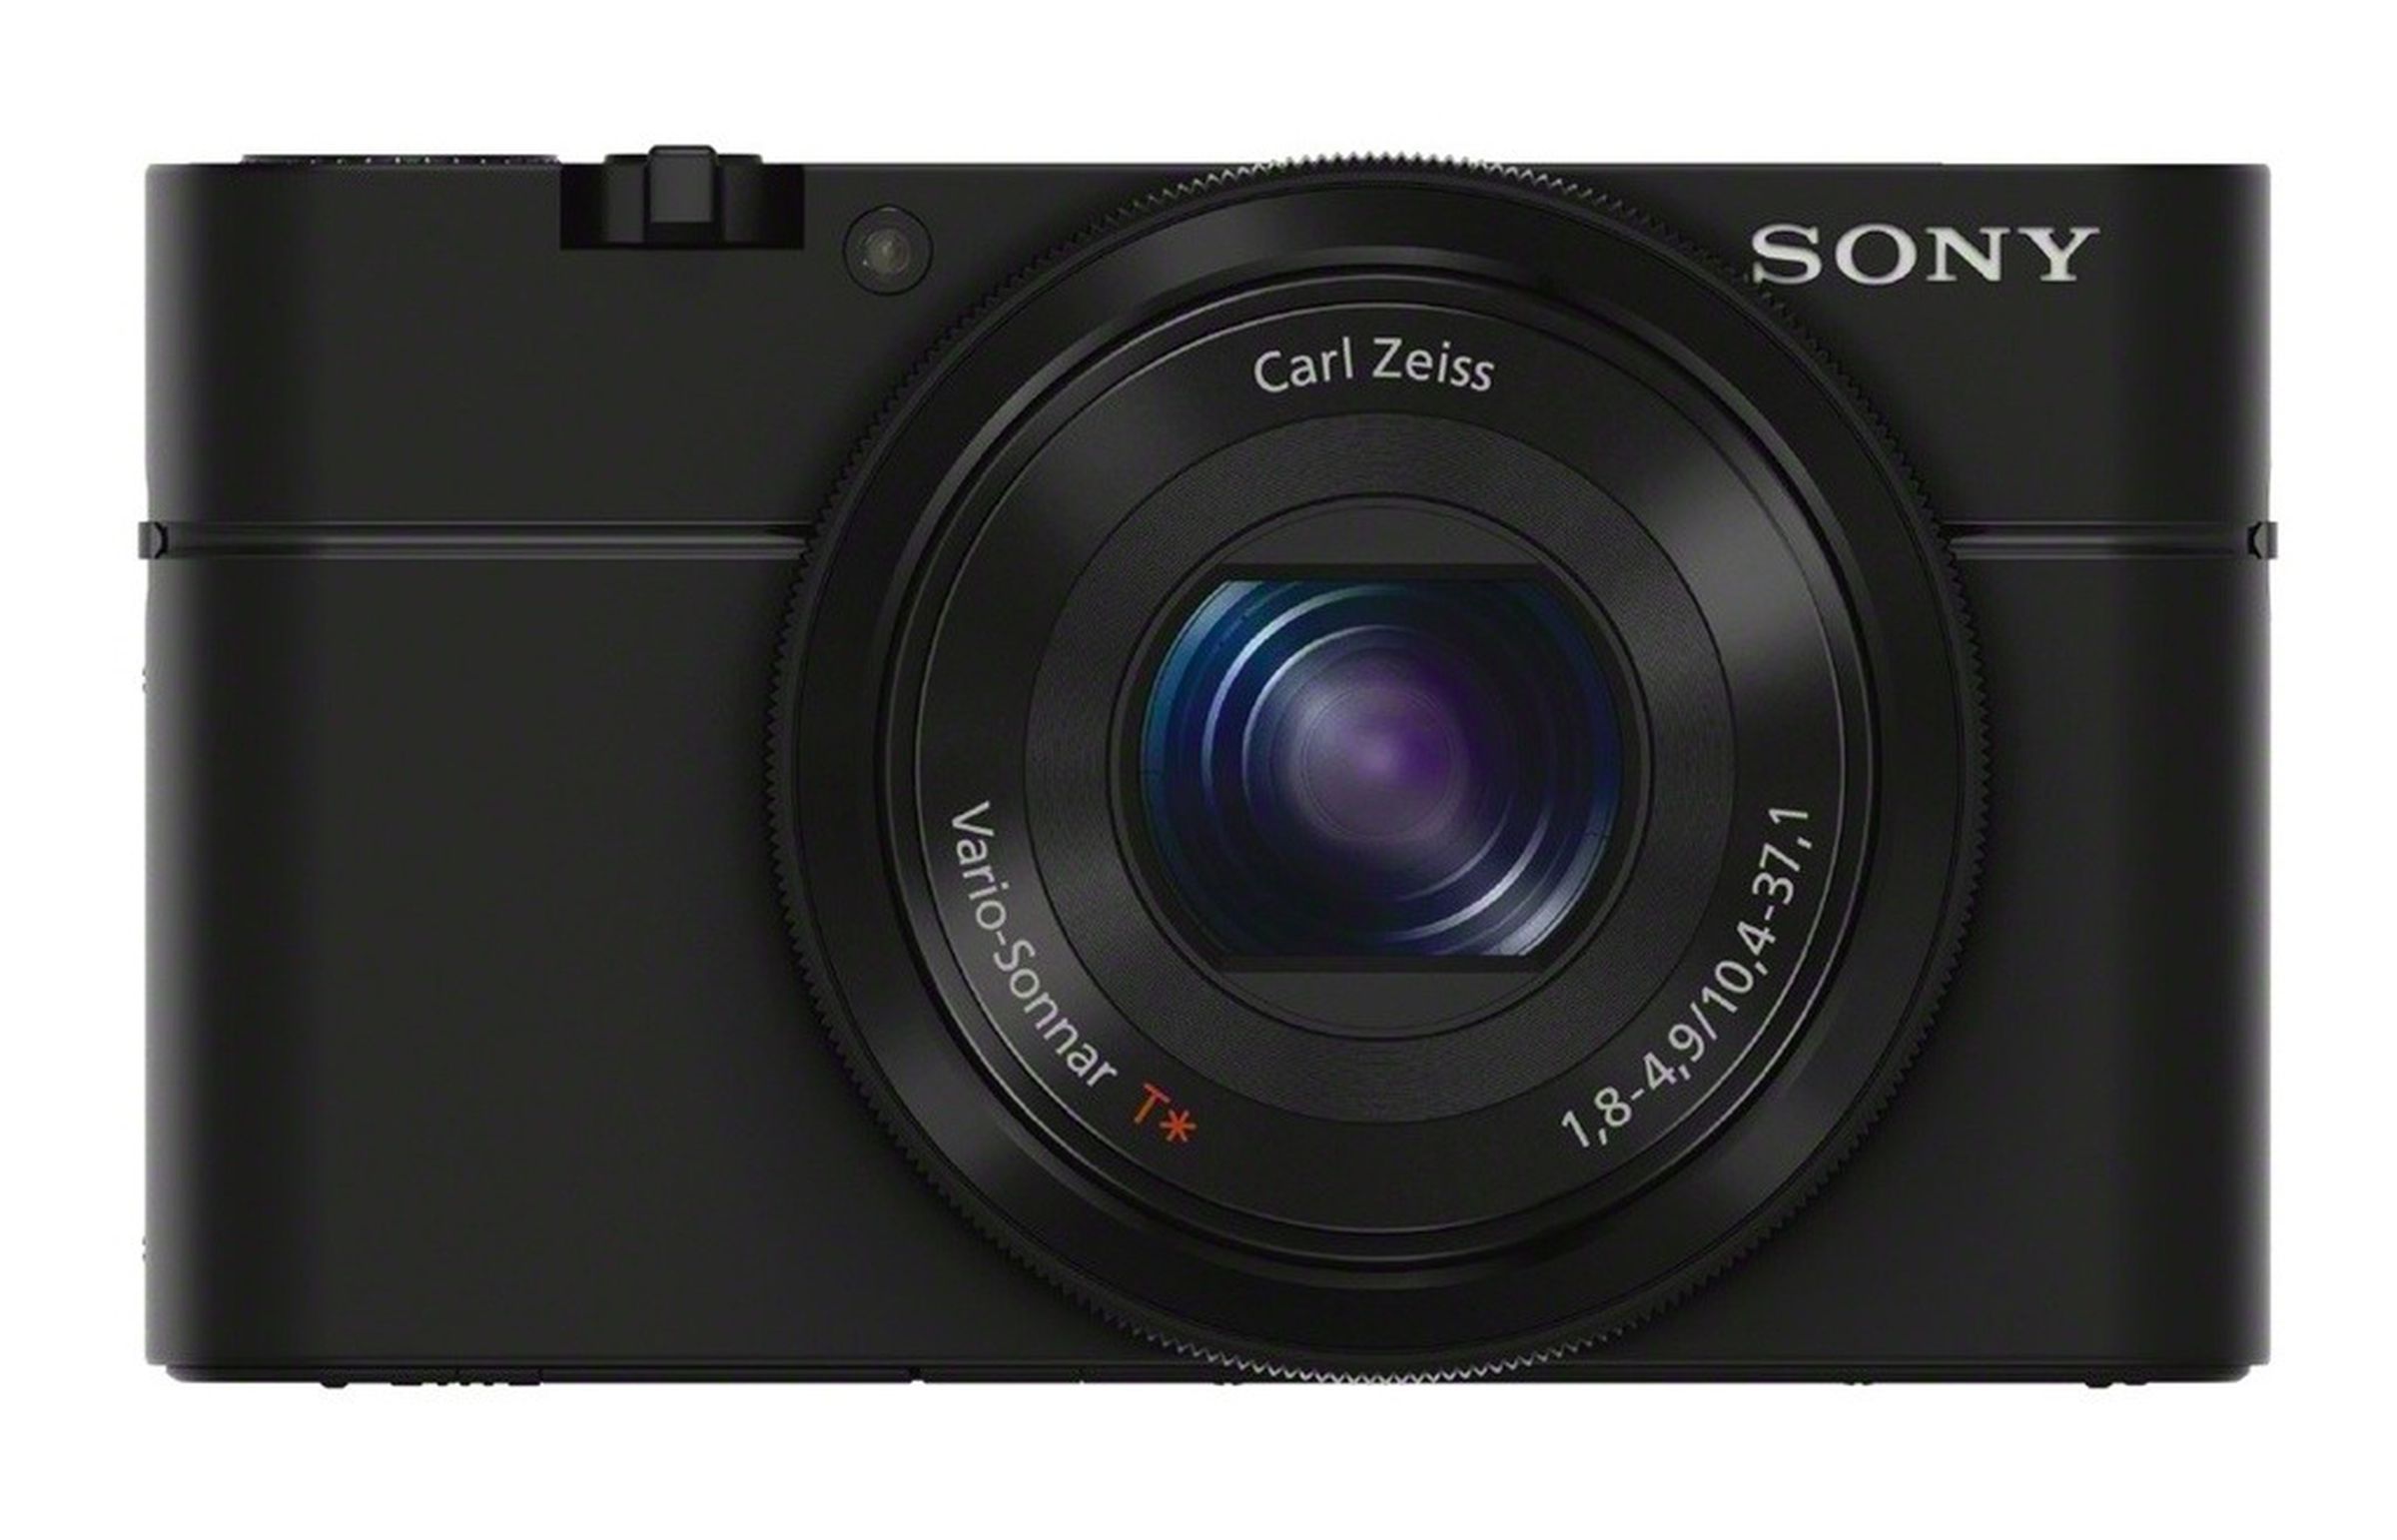 Sony Cyber-shot DSC-RX100 press photos